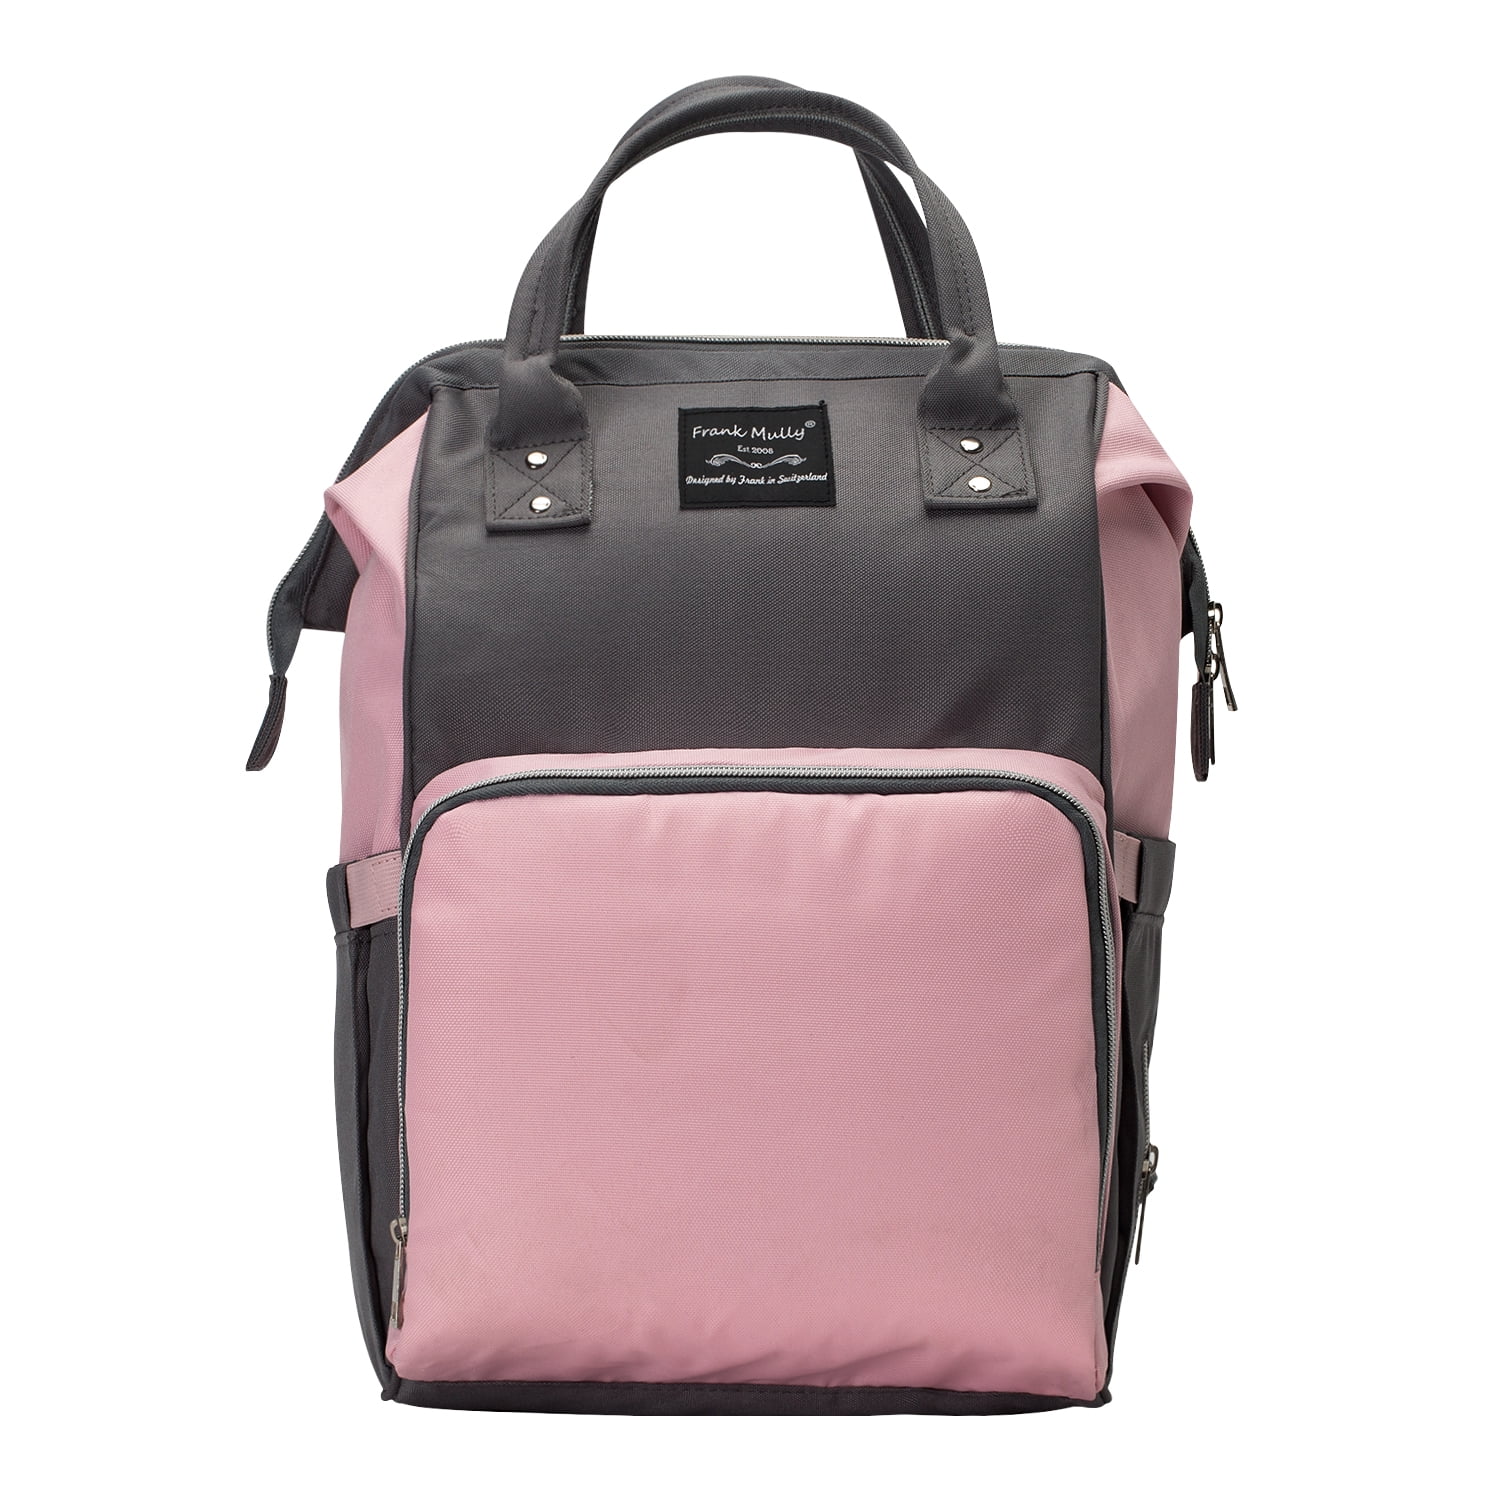 SoHo Backpack Diaper Bag, Metropolitan, Pink and Gray, 5 Piece Set - 0